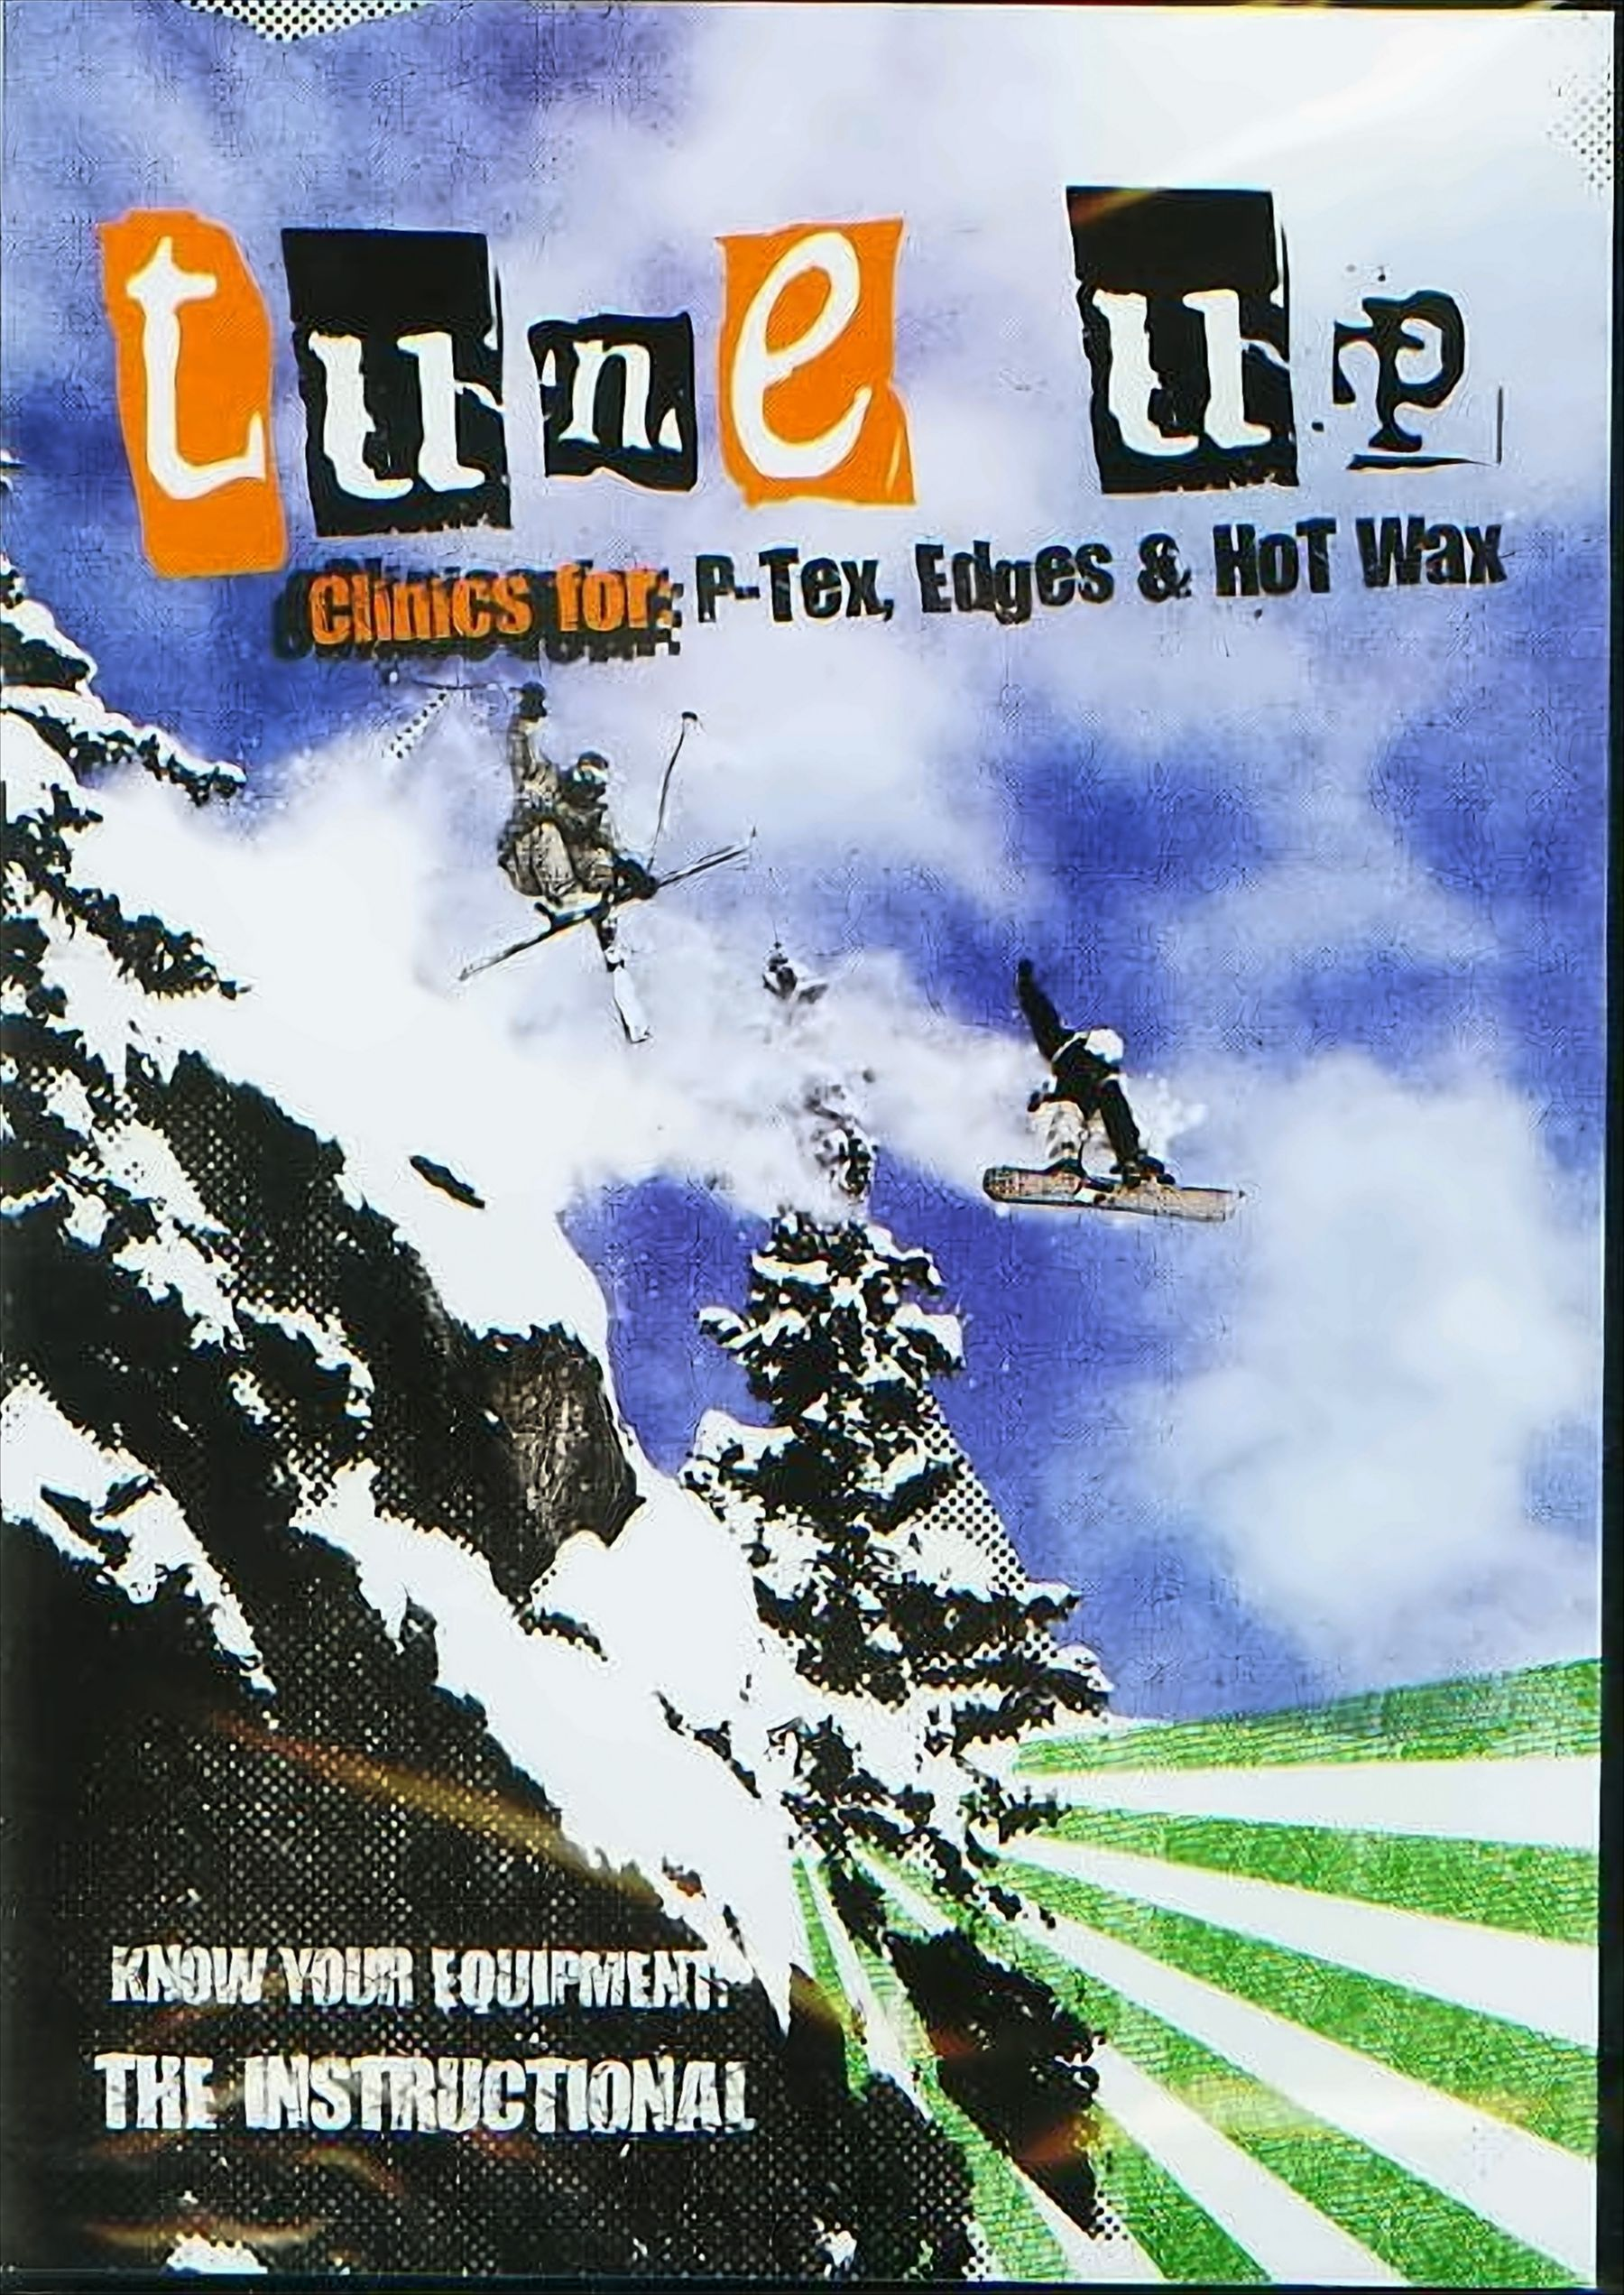 up, + P-Tex, Wax Clinics Hot for: Tune Edges DVD